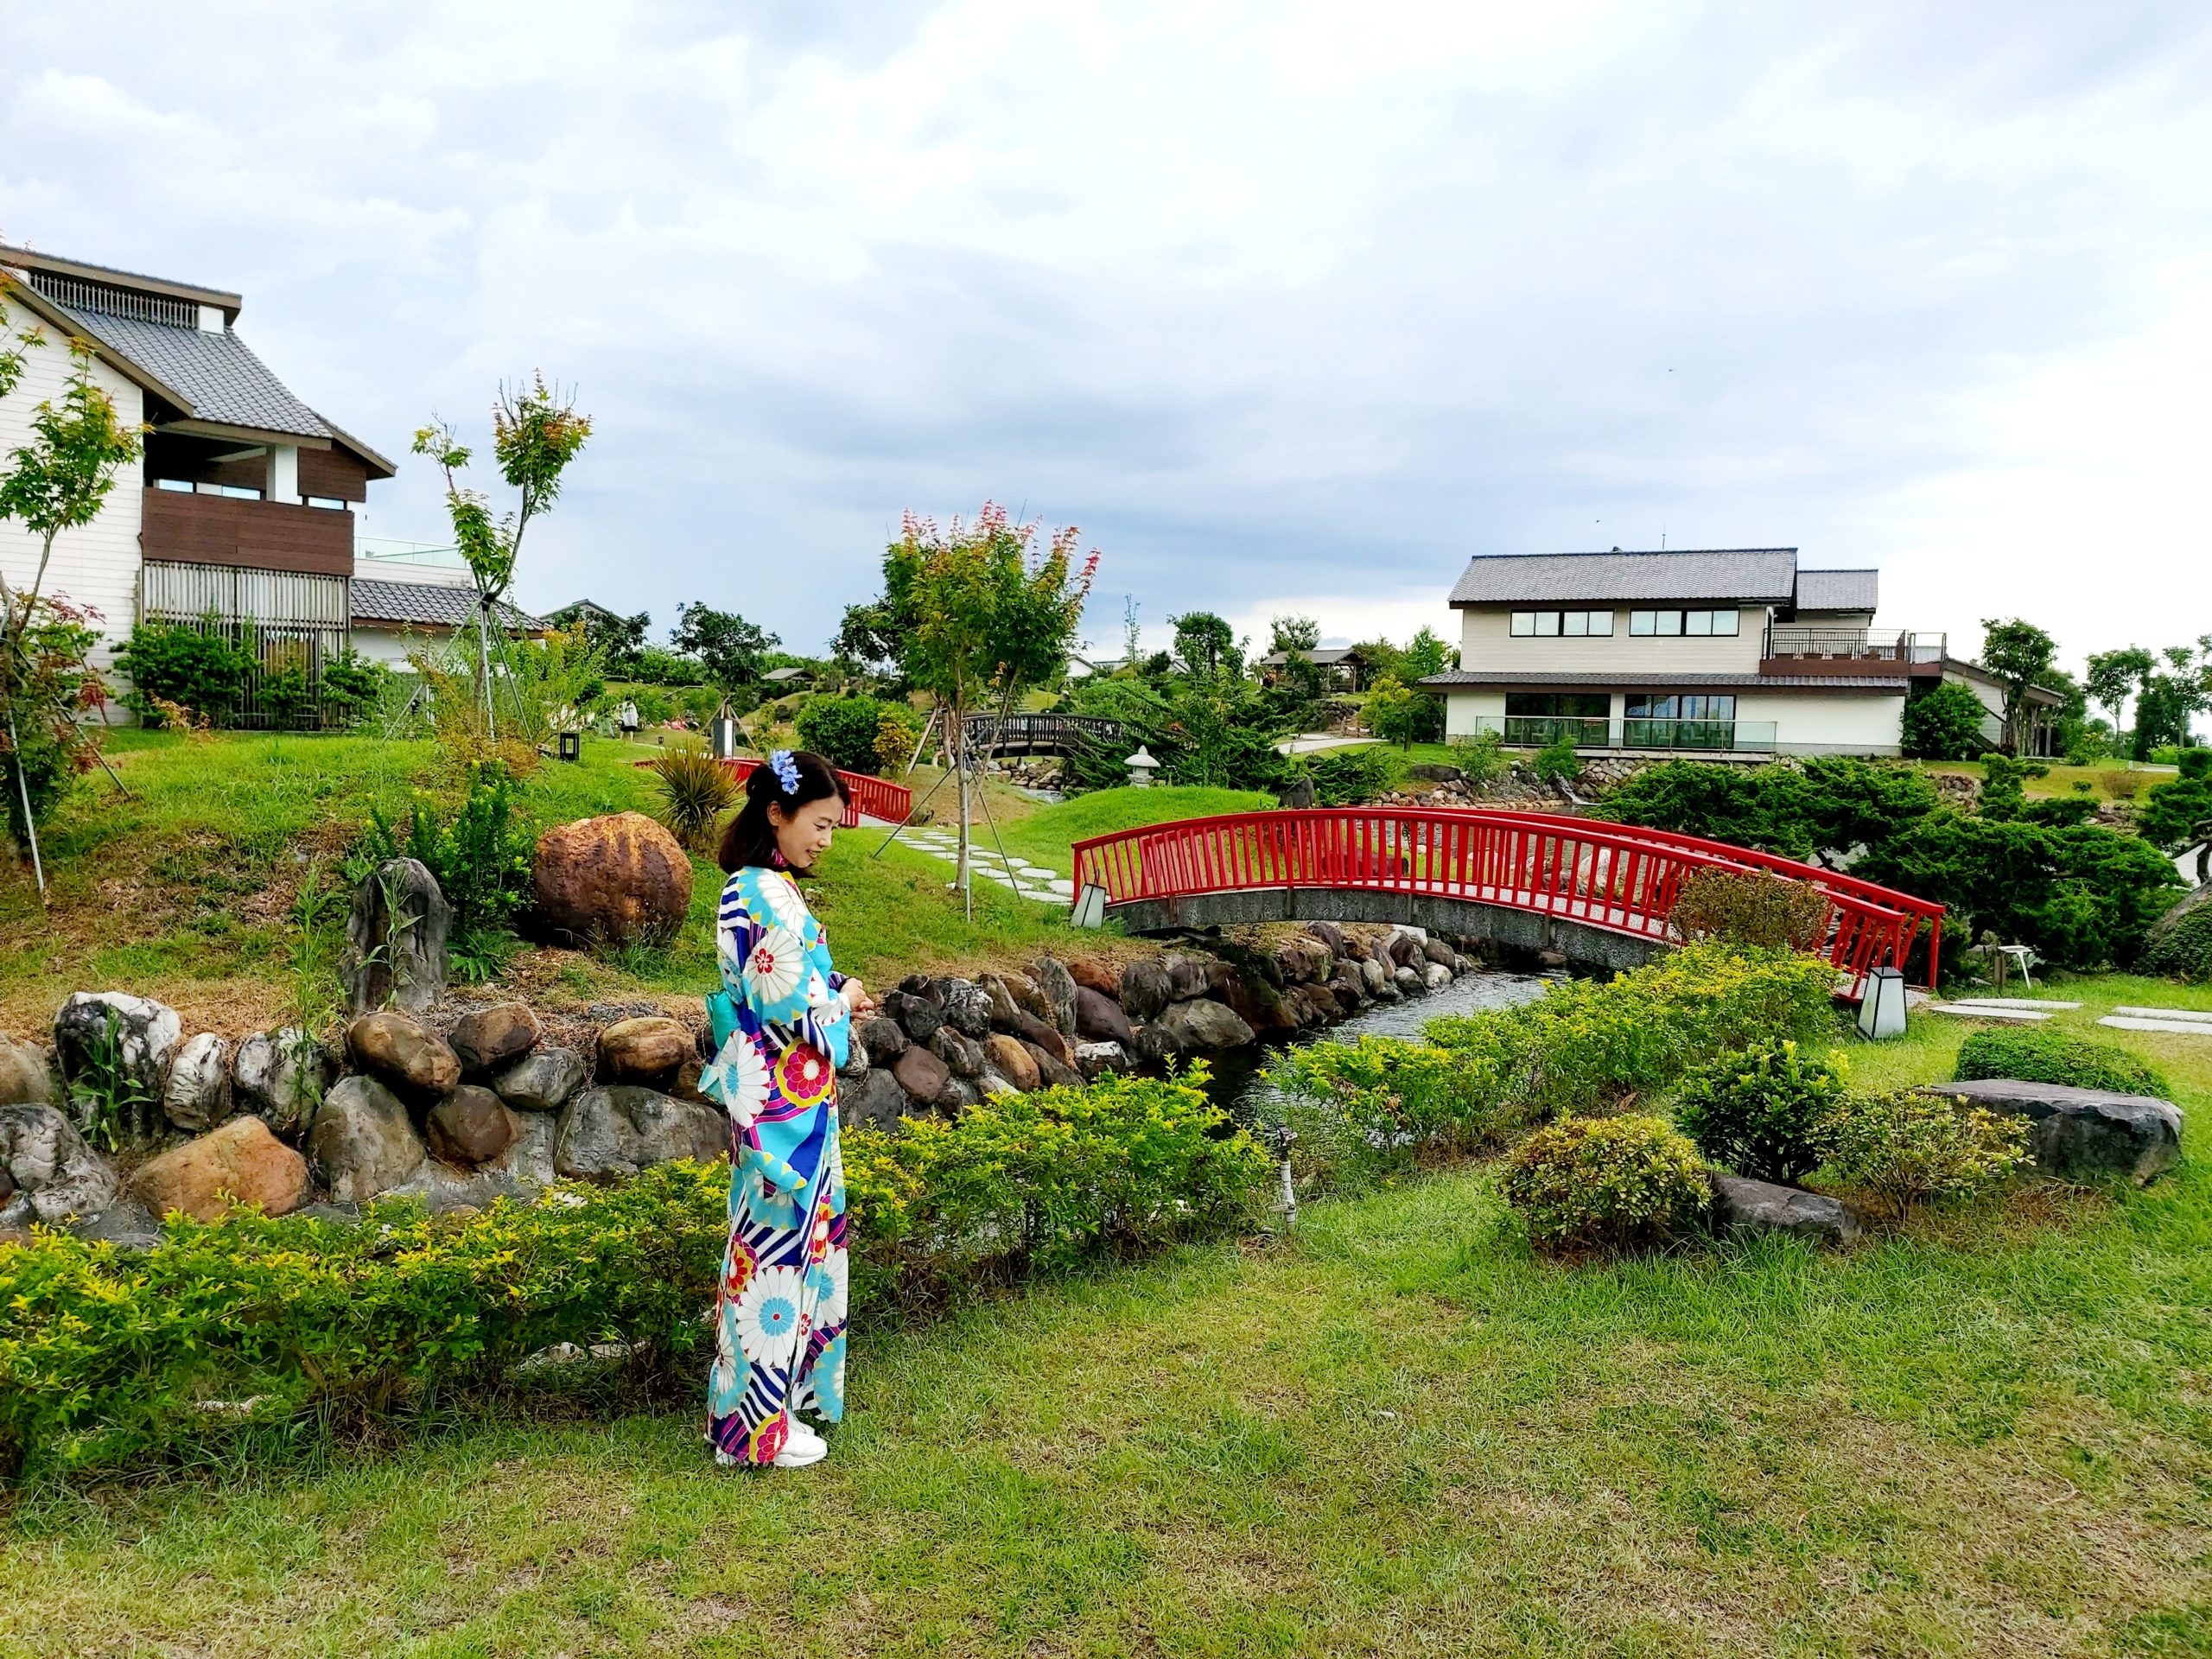 Route Inn飯店,山形Yamagata,日本,日本旅遊,飯店或渡假村 @傑菲亞娃JEFFIA FANG